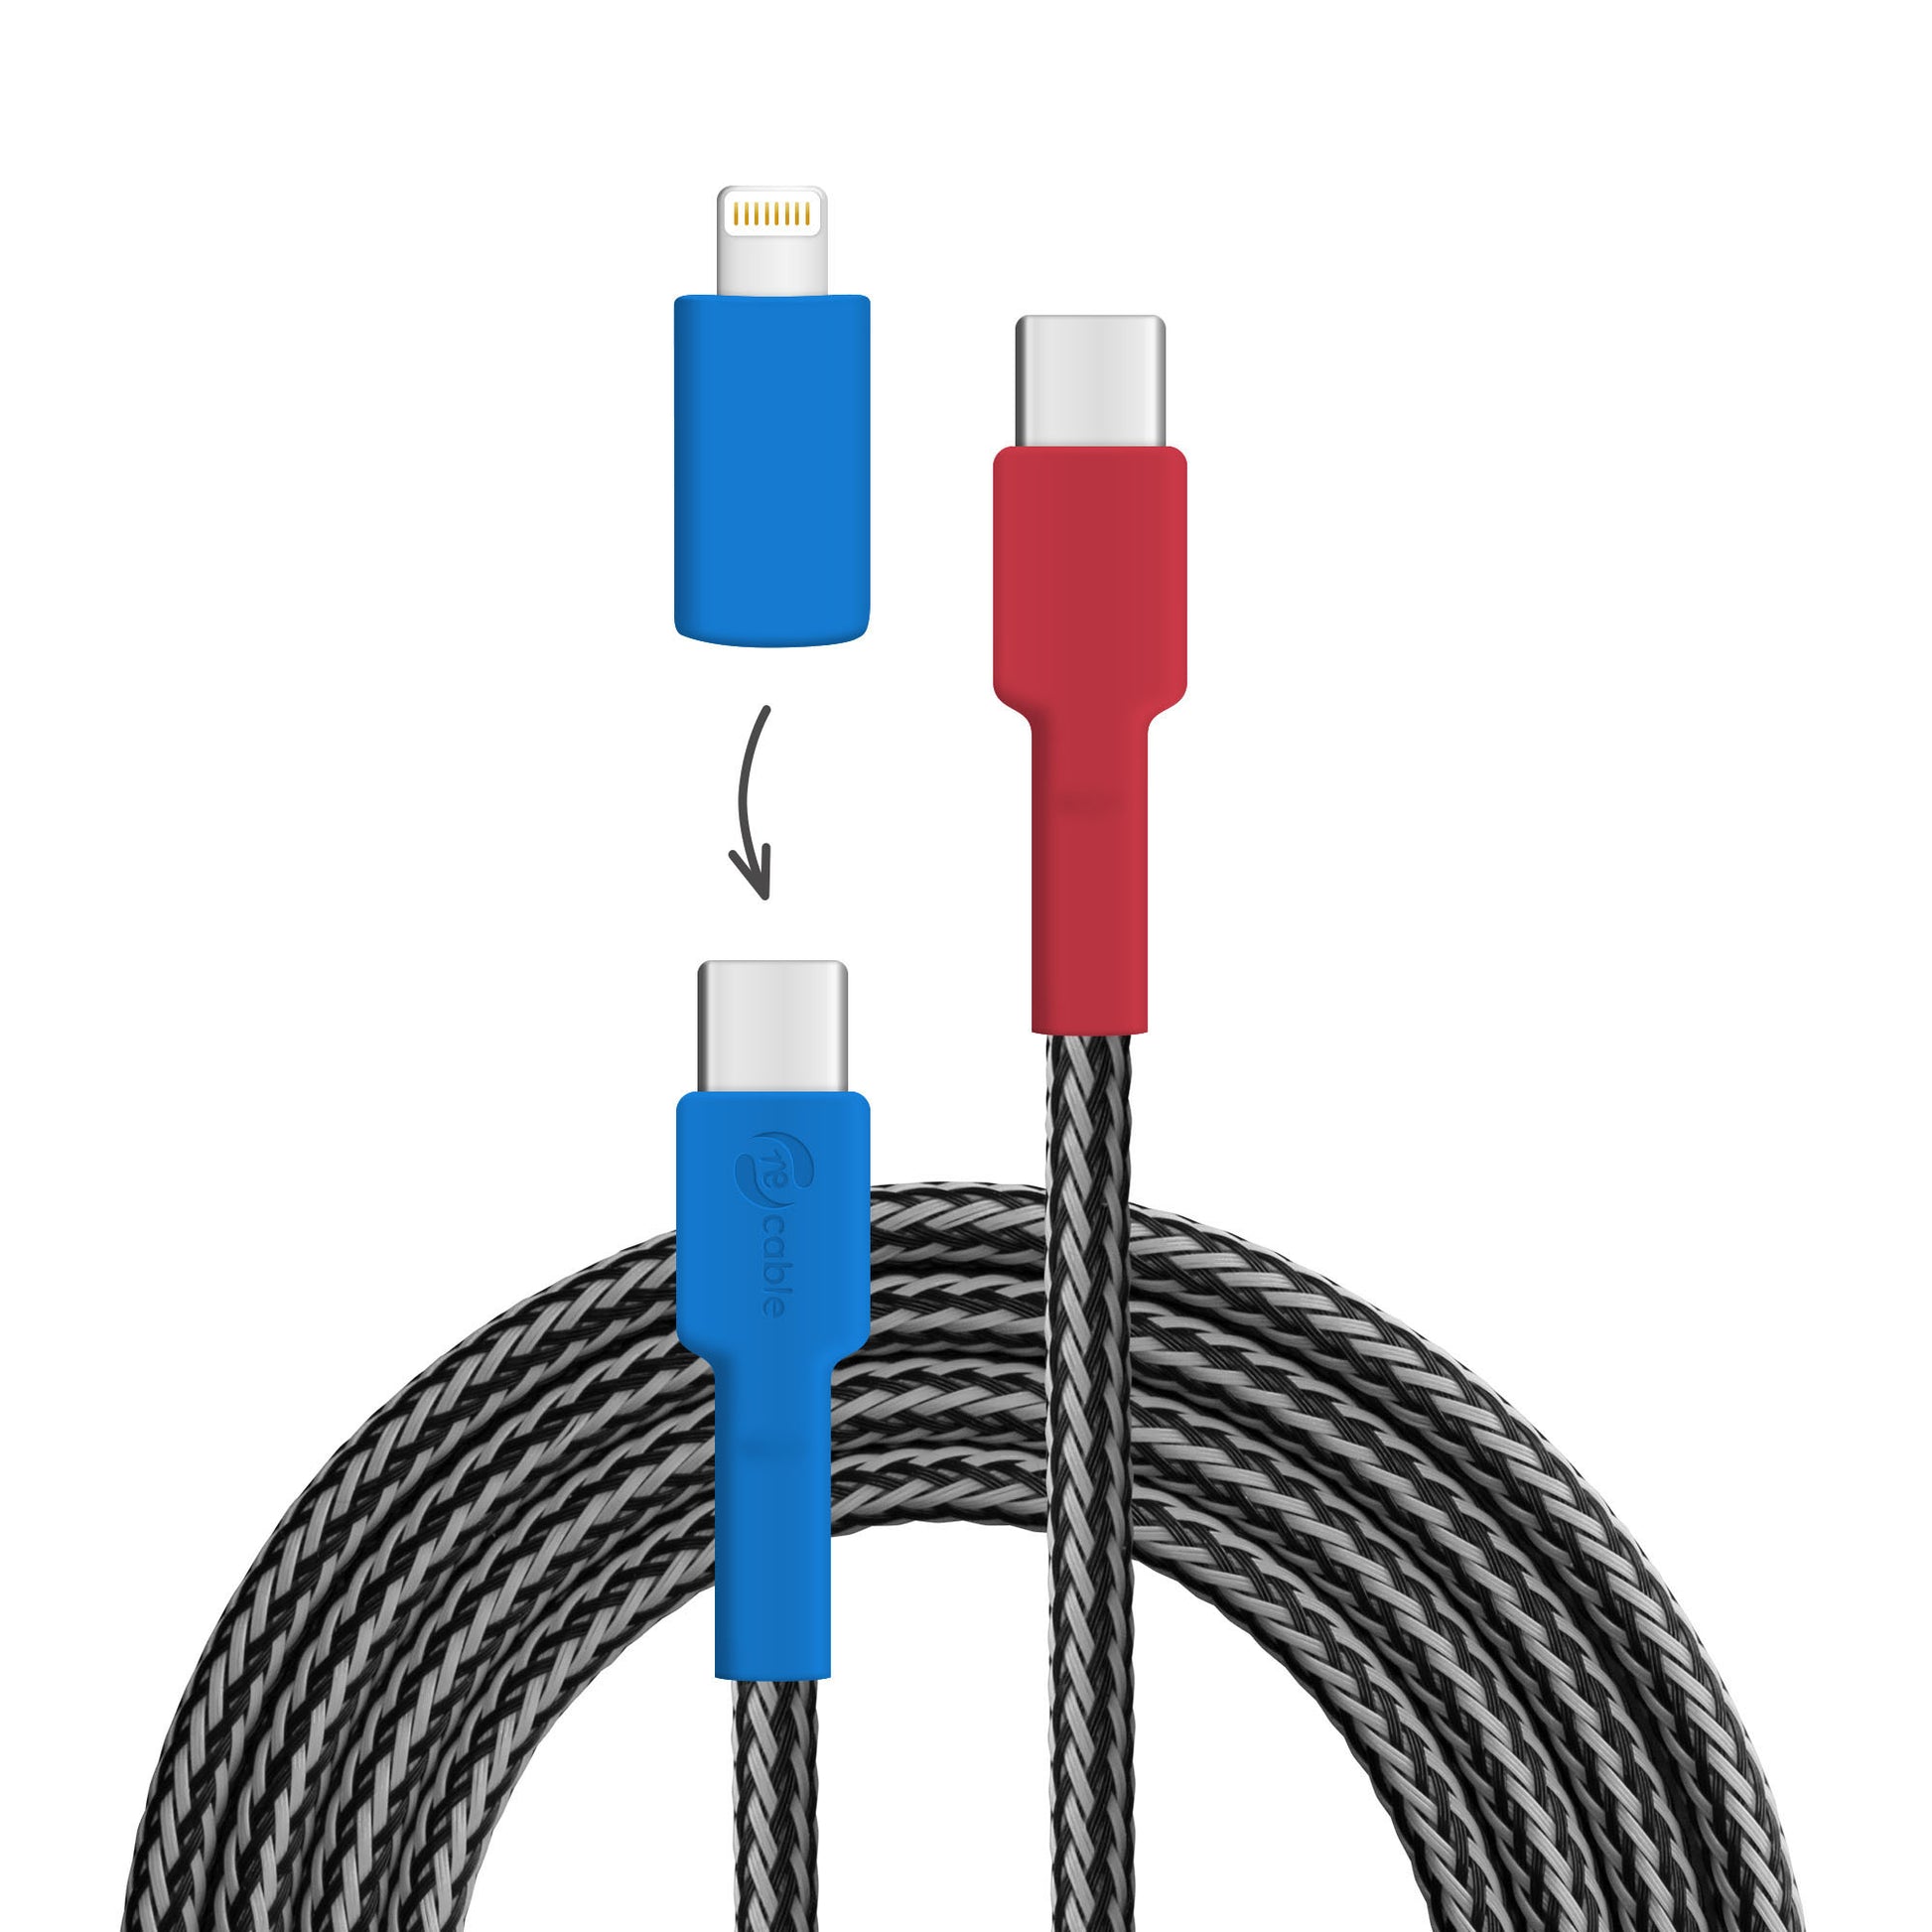 USB-Kabel, Design: Helmkasuar, Anschlüsse: USB C auf USB C mit Lightning Adapter (nicht verbunden)